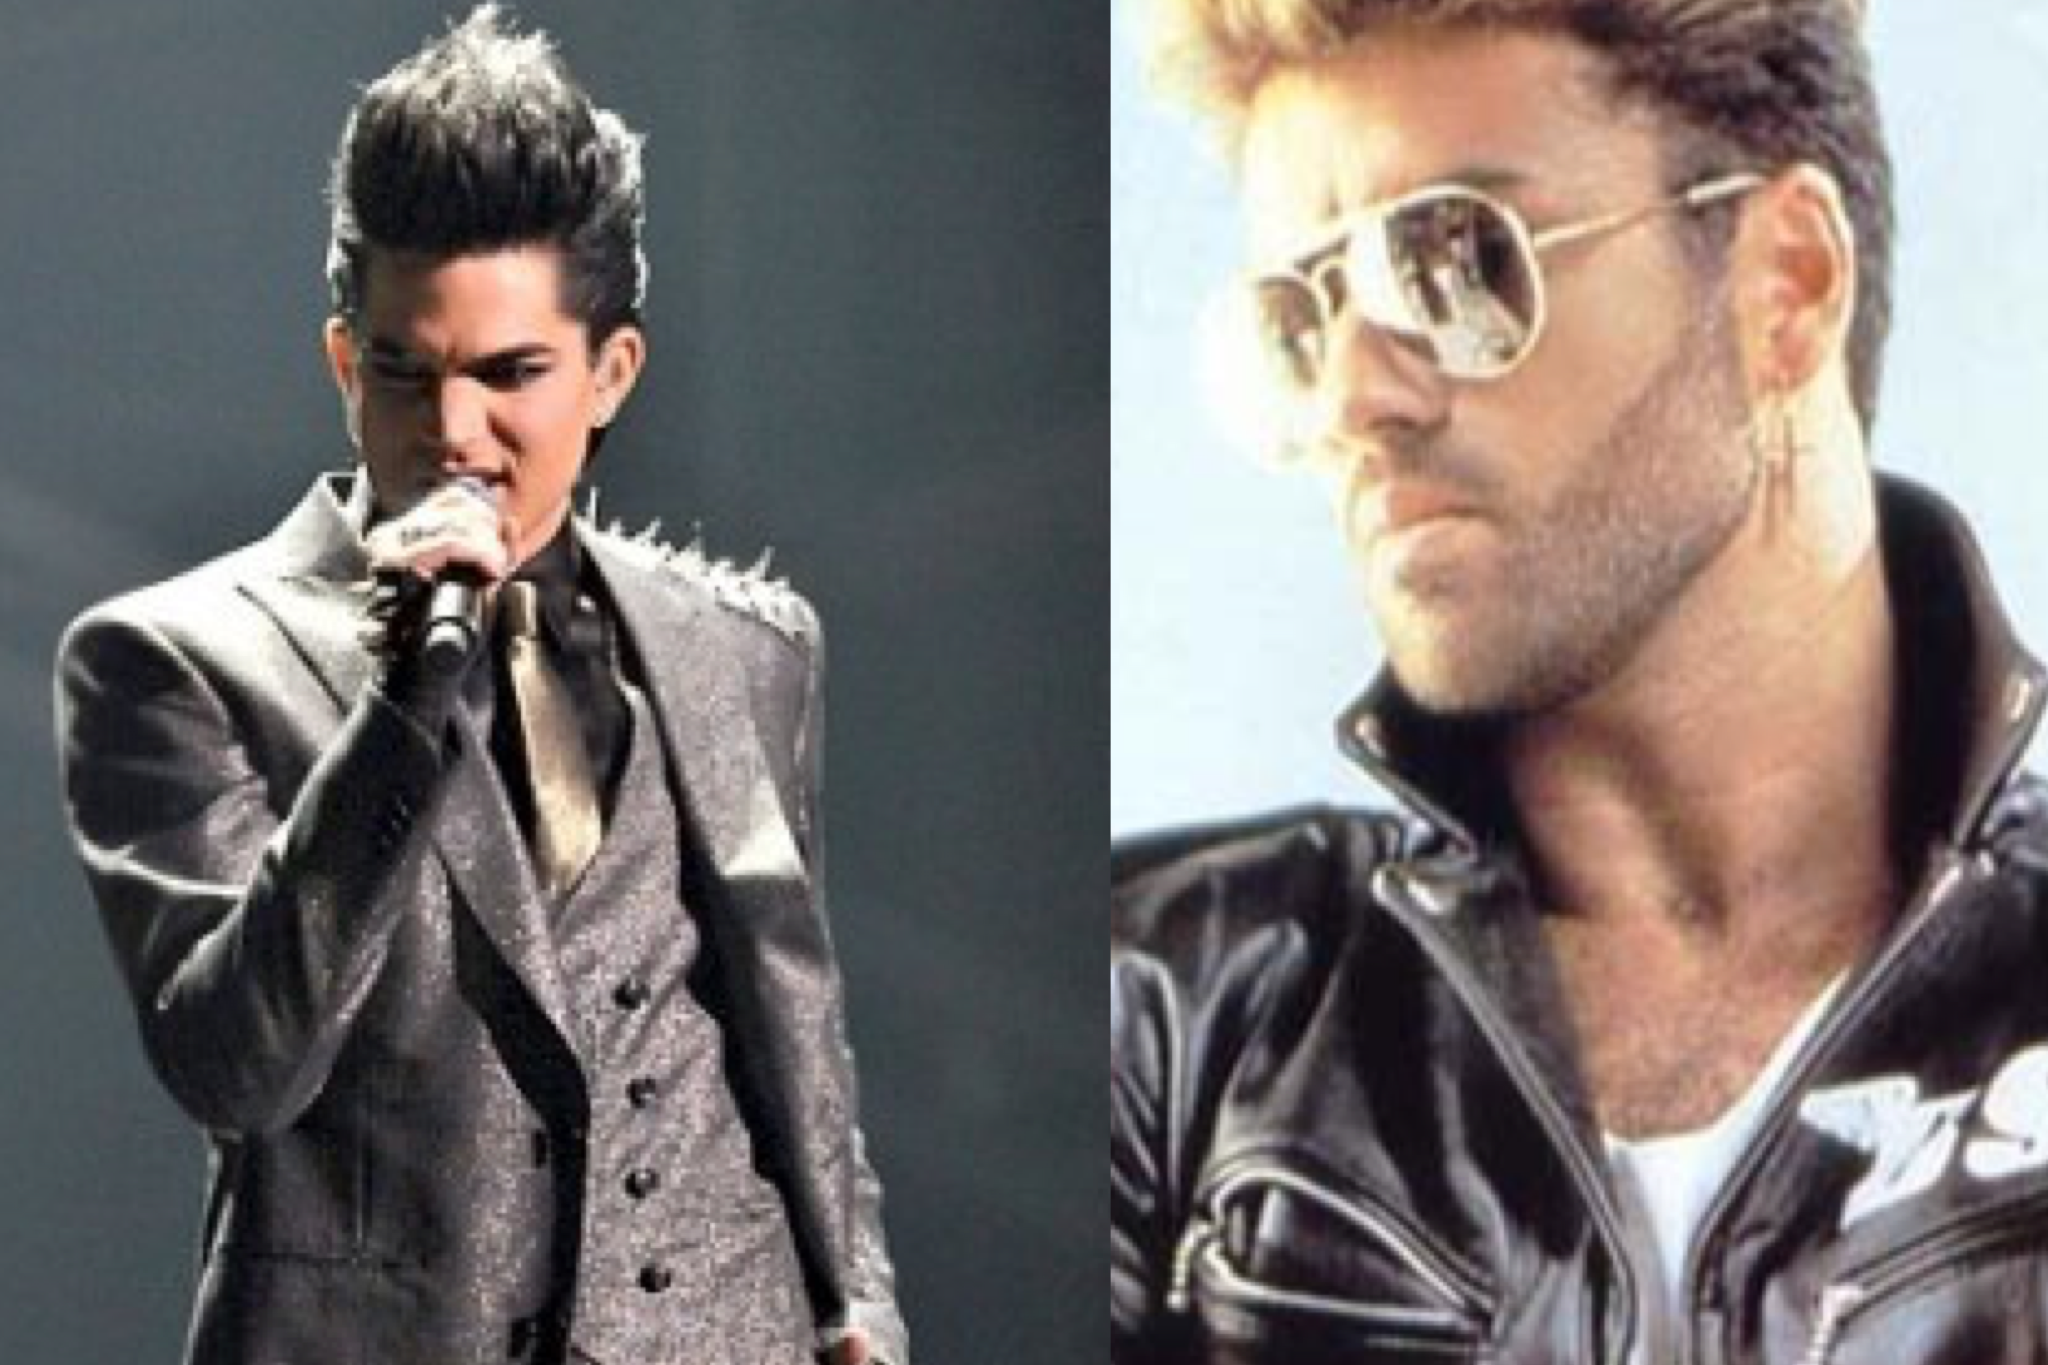 Adam Lambert (left) and George Michael (right)